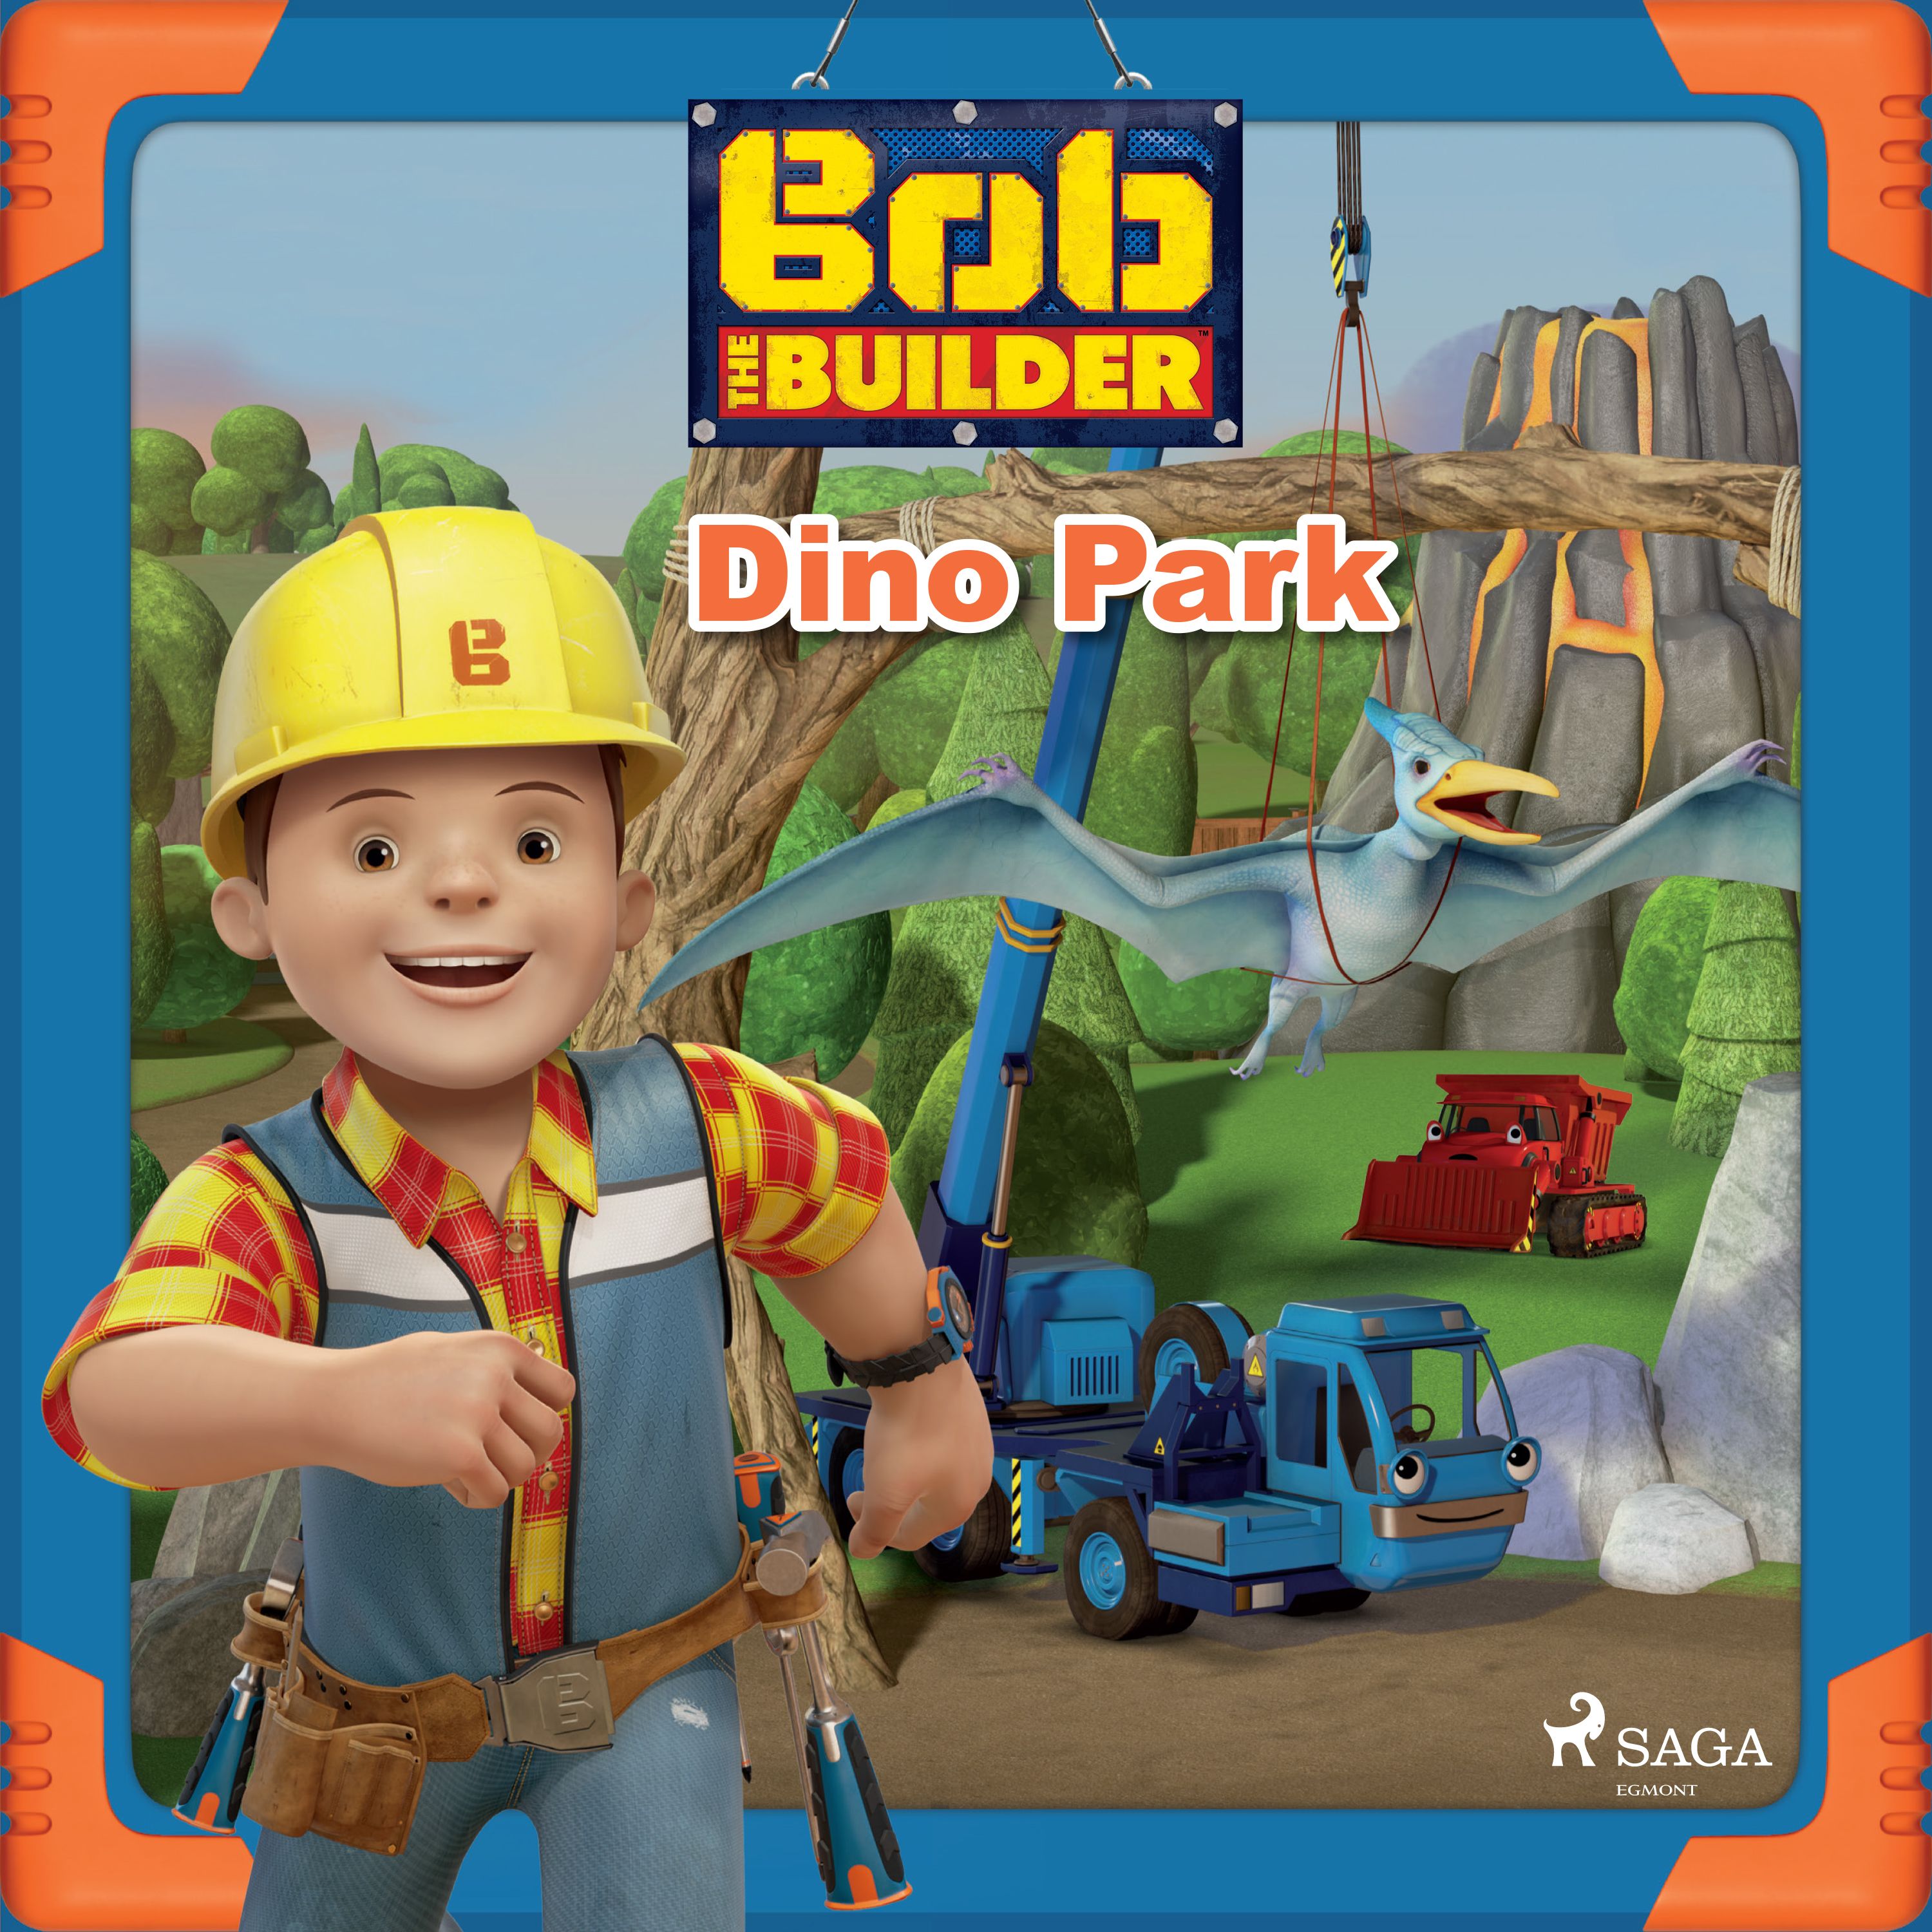 Bob the Builder: Dino Park, audiobook by Mattel